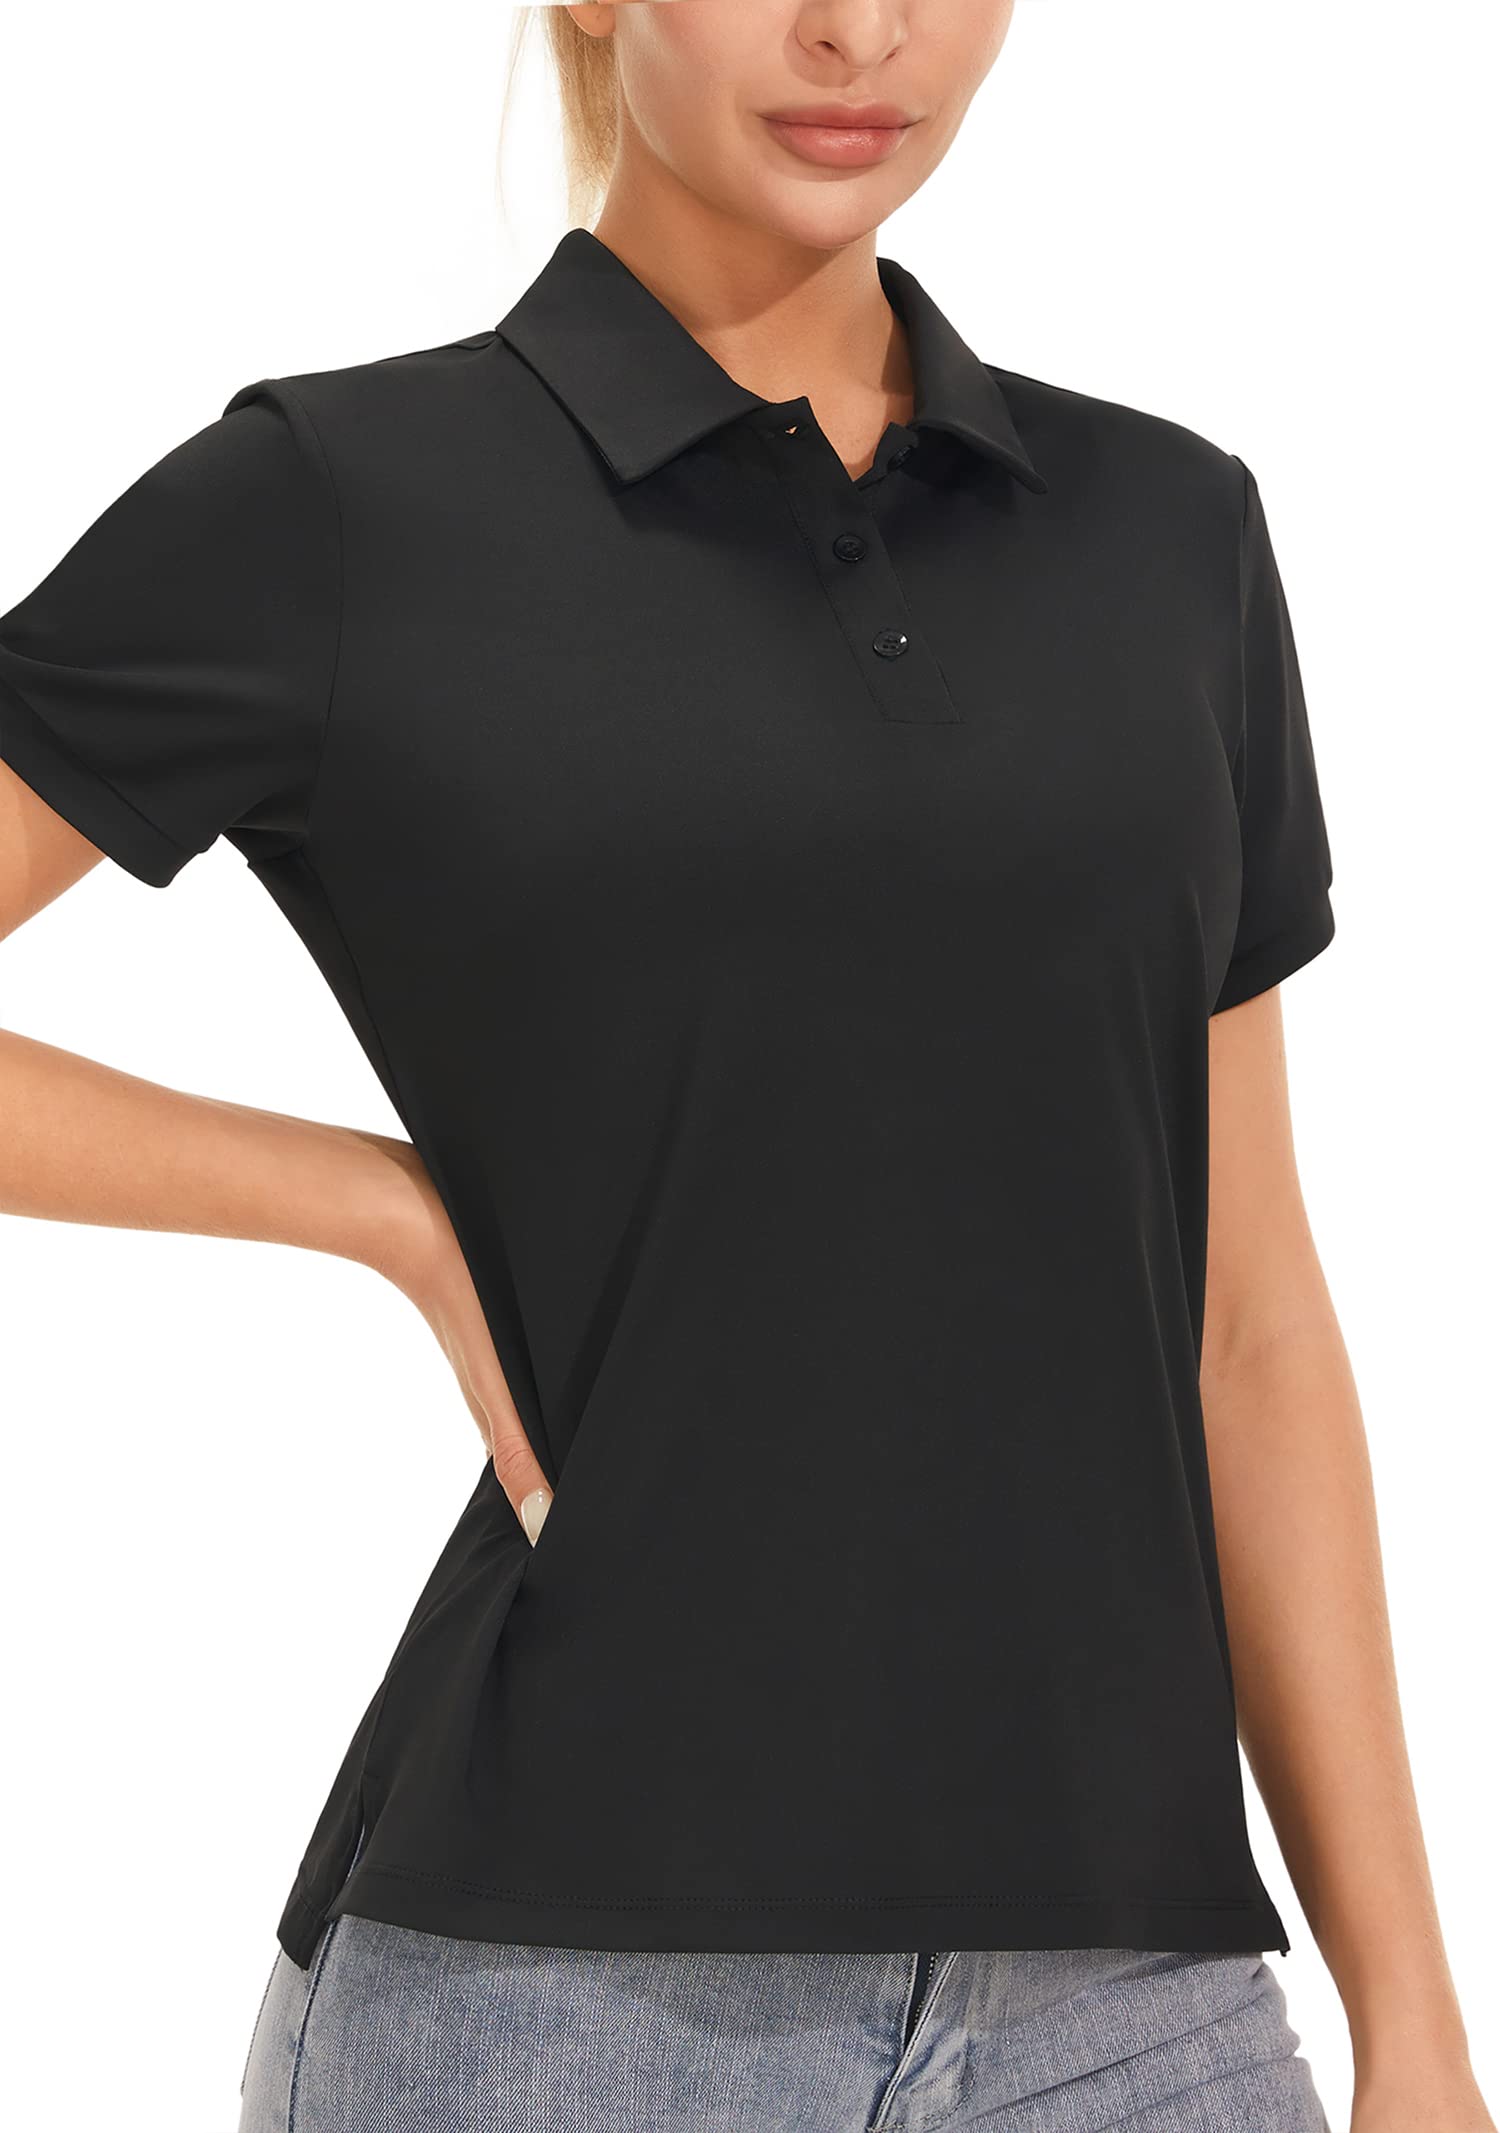 PERSIT Women's Golf Polo Shirts UPF 50+ Tennis Athletic T-Shirts